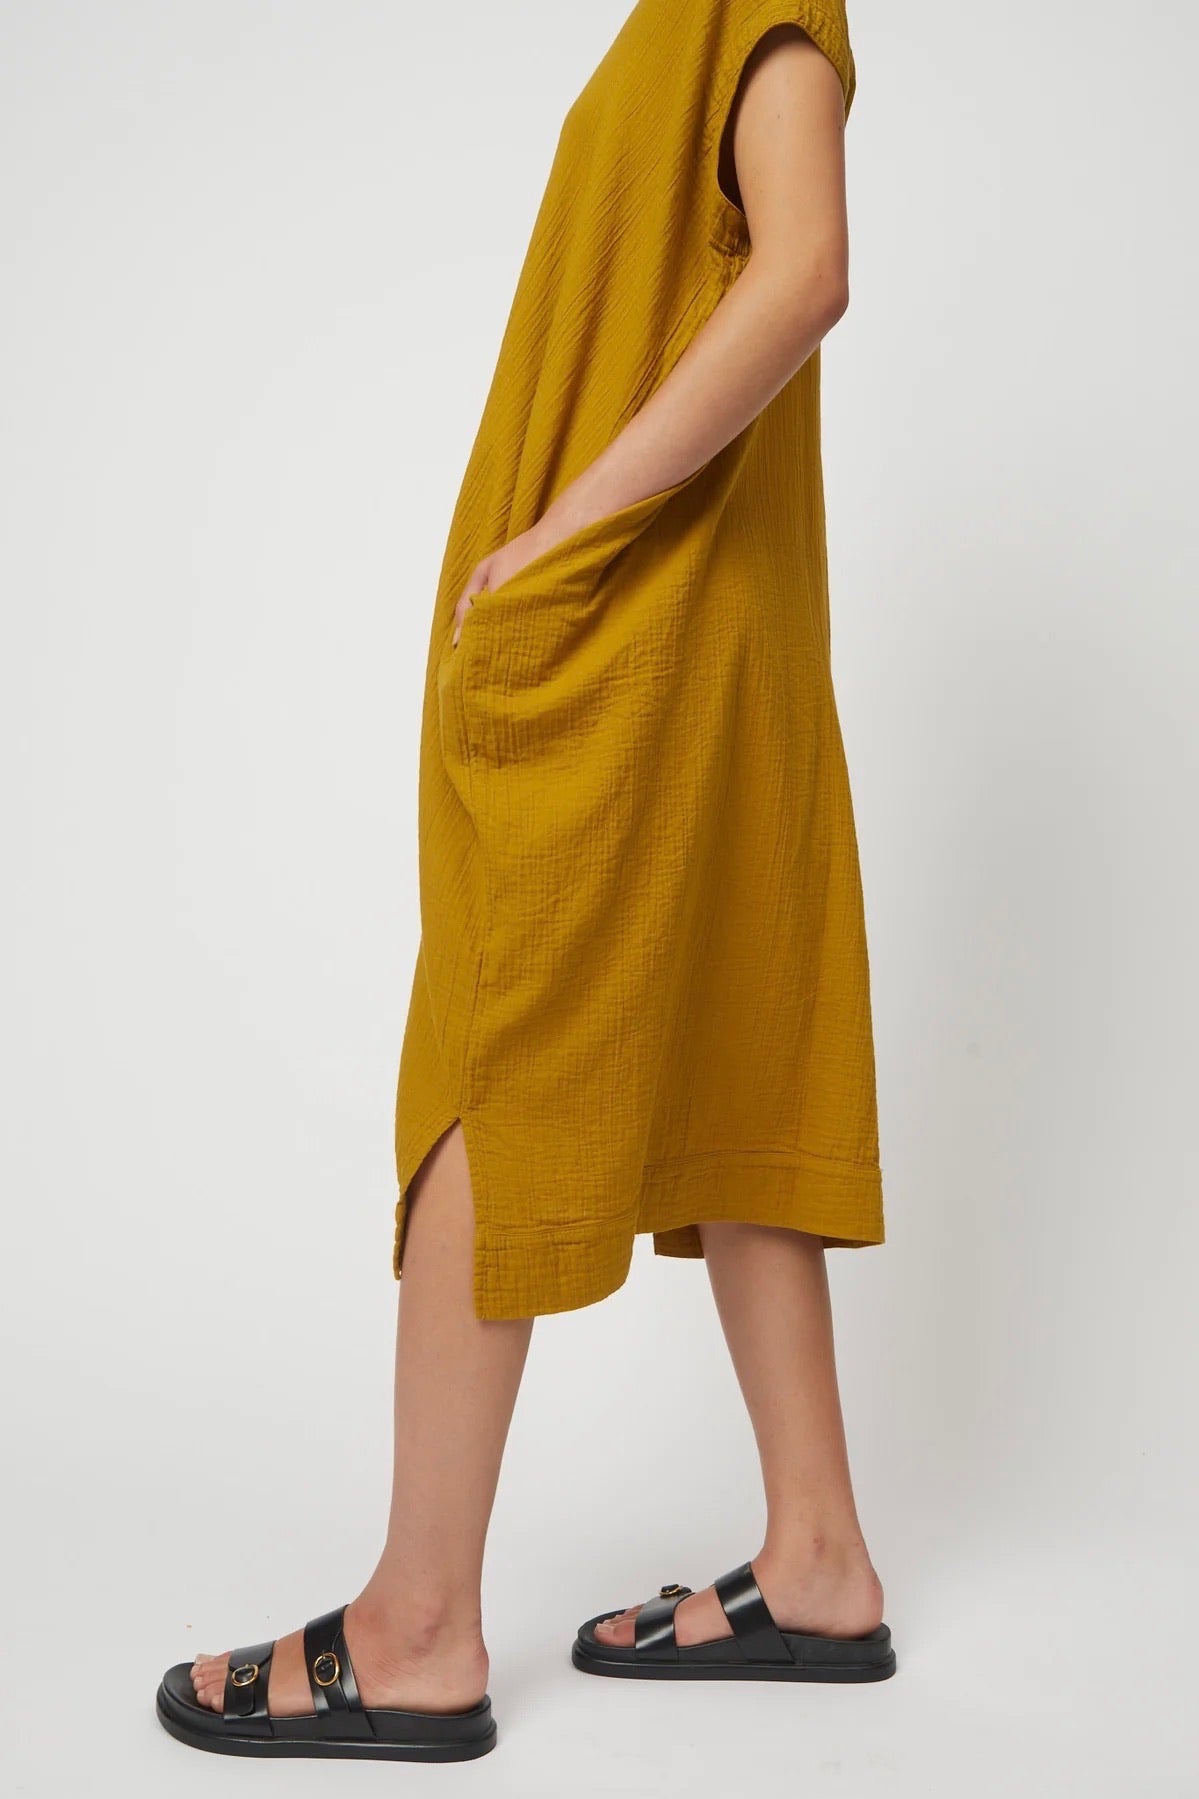 Atelier Delphine Crescent Dress Long / Amber Green